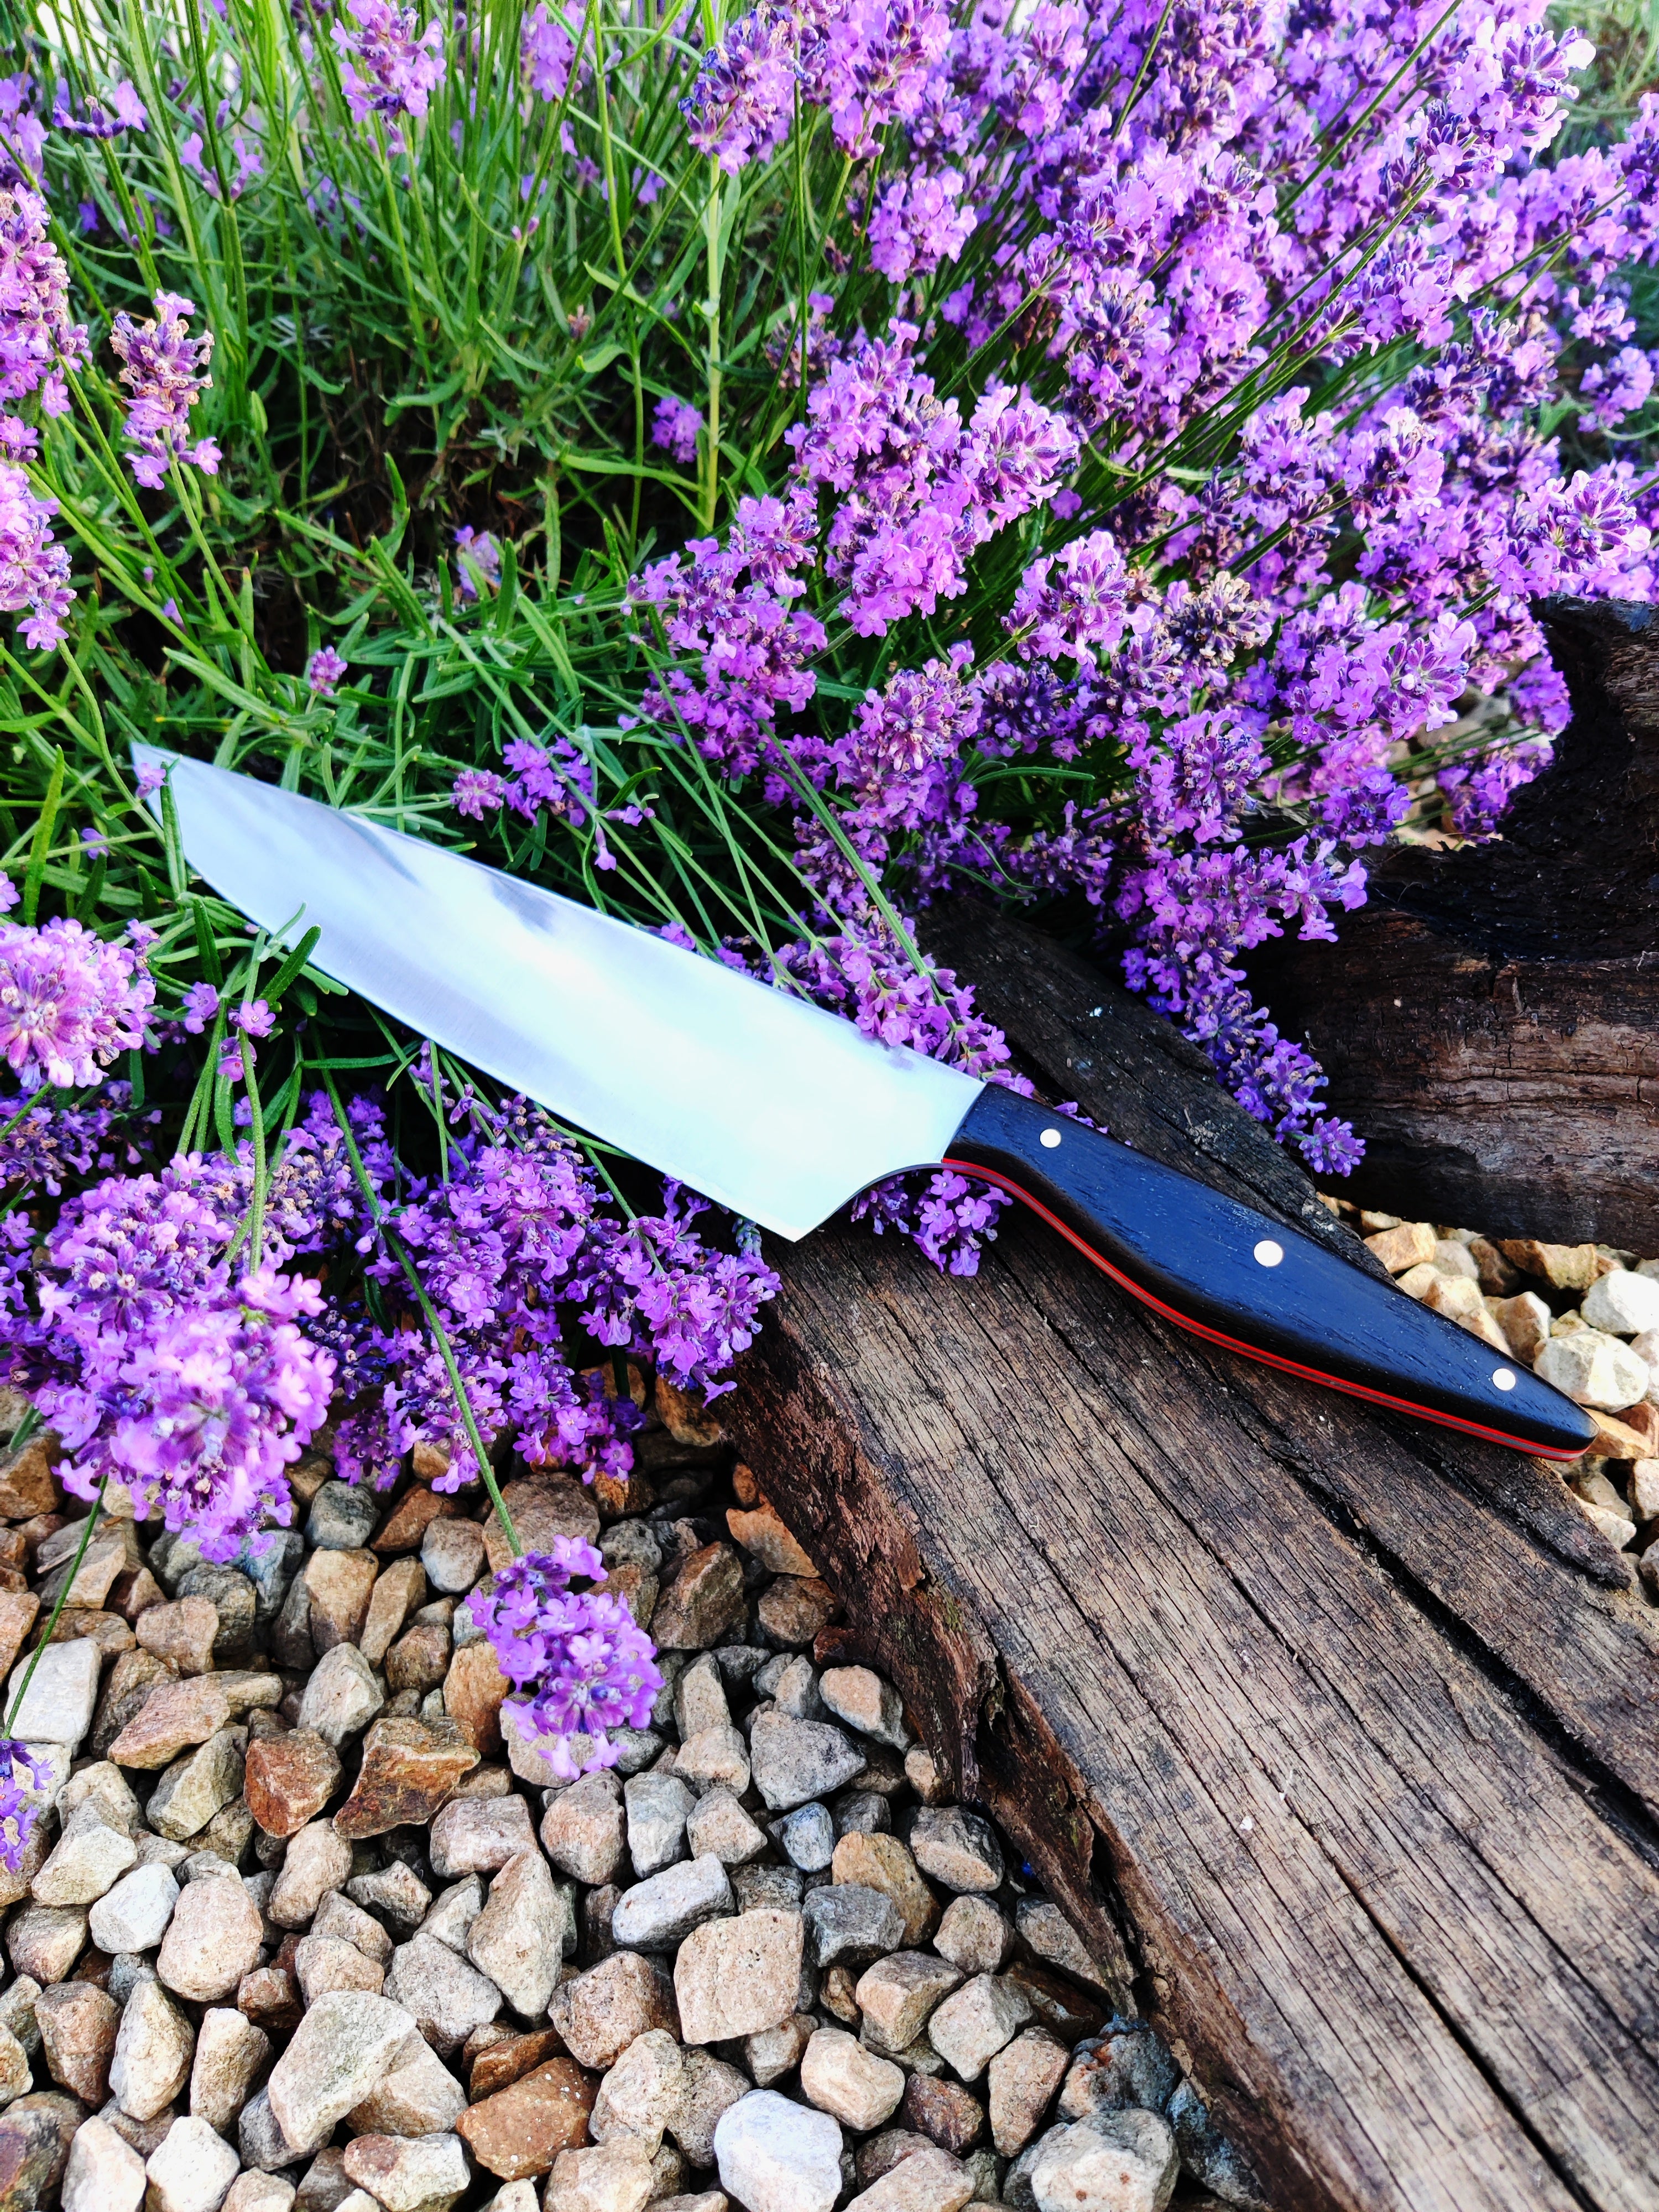 Stainless cooks knife with irish bog oak